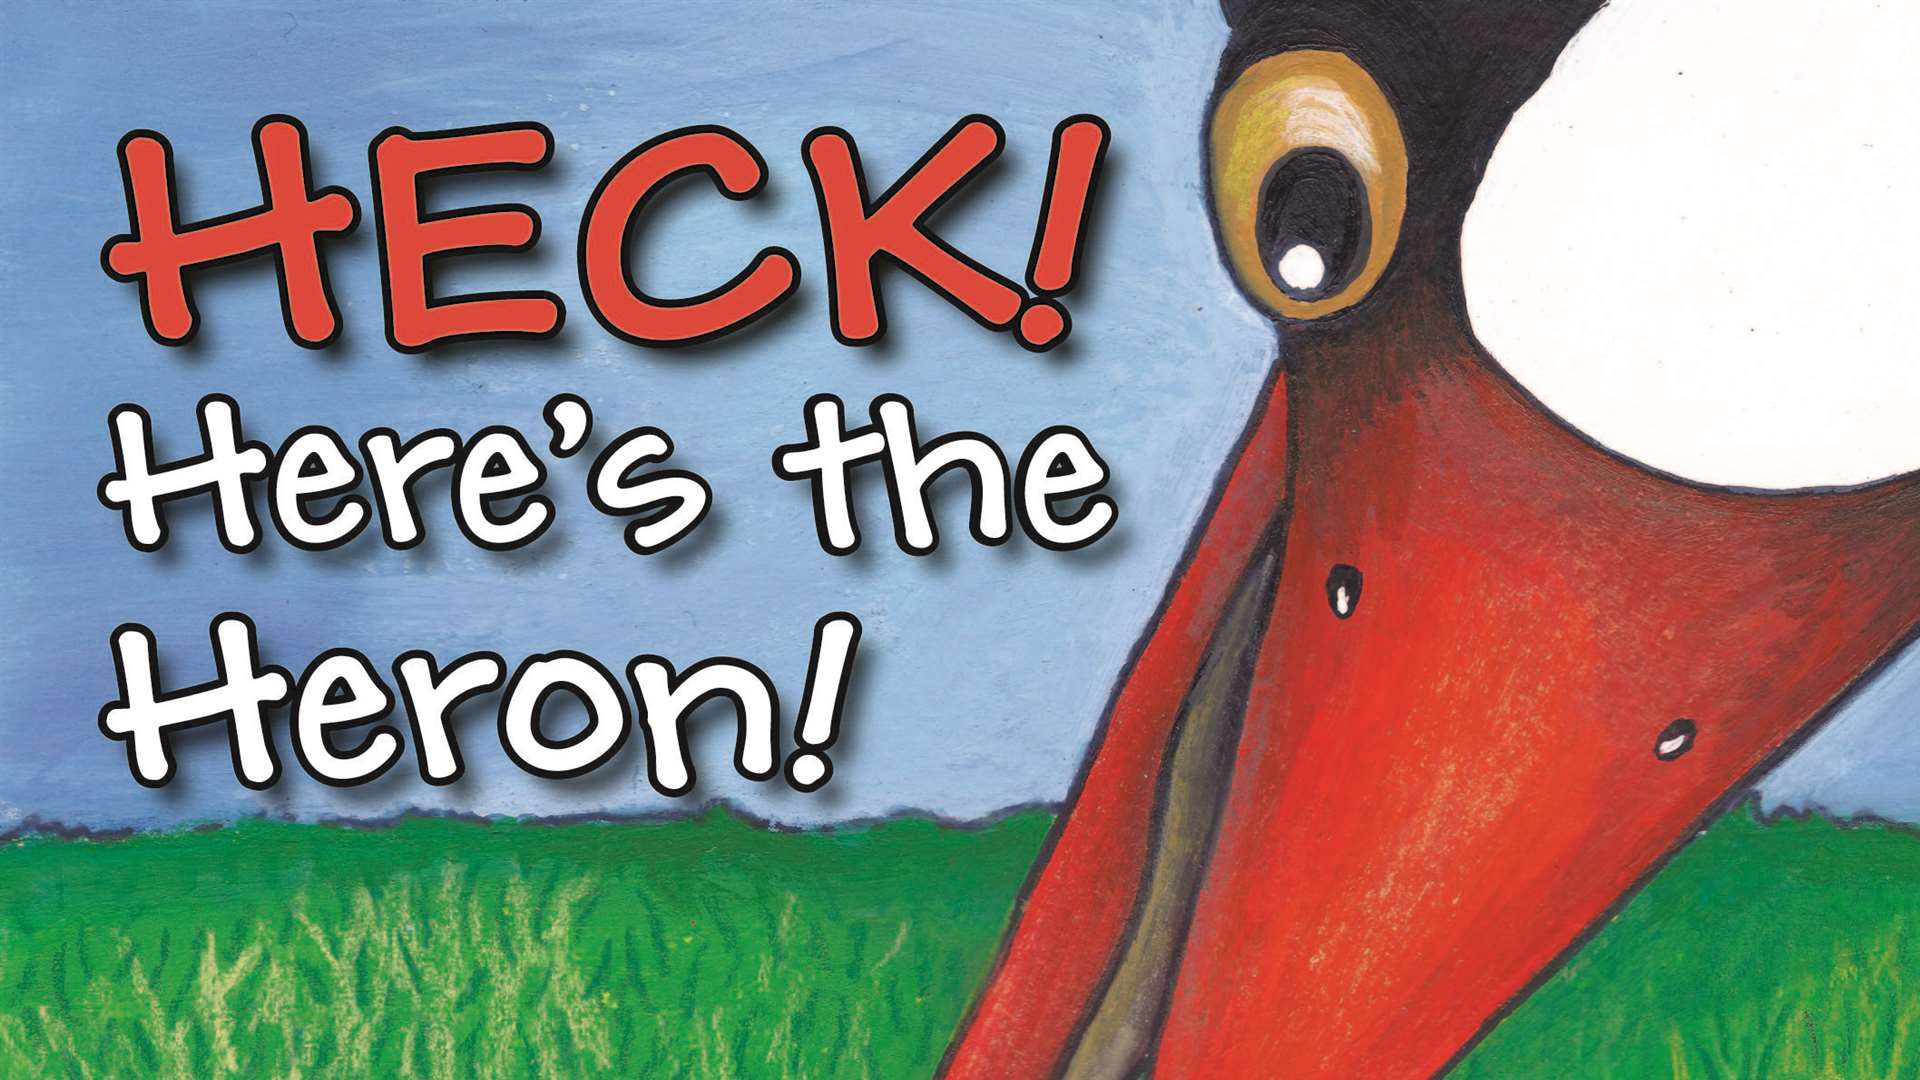 Heck! The Heron by Maidstone author Davina Rayfield